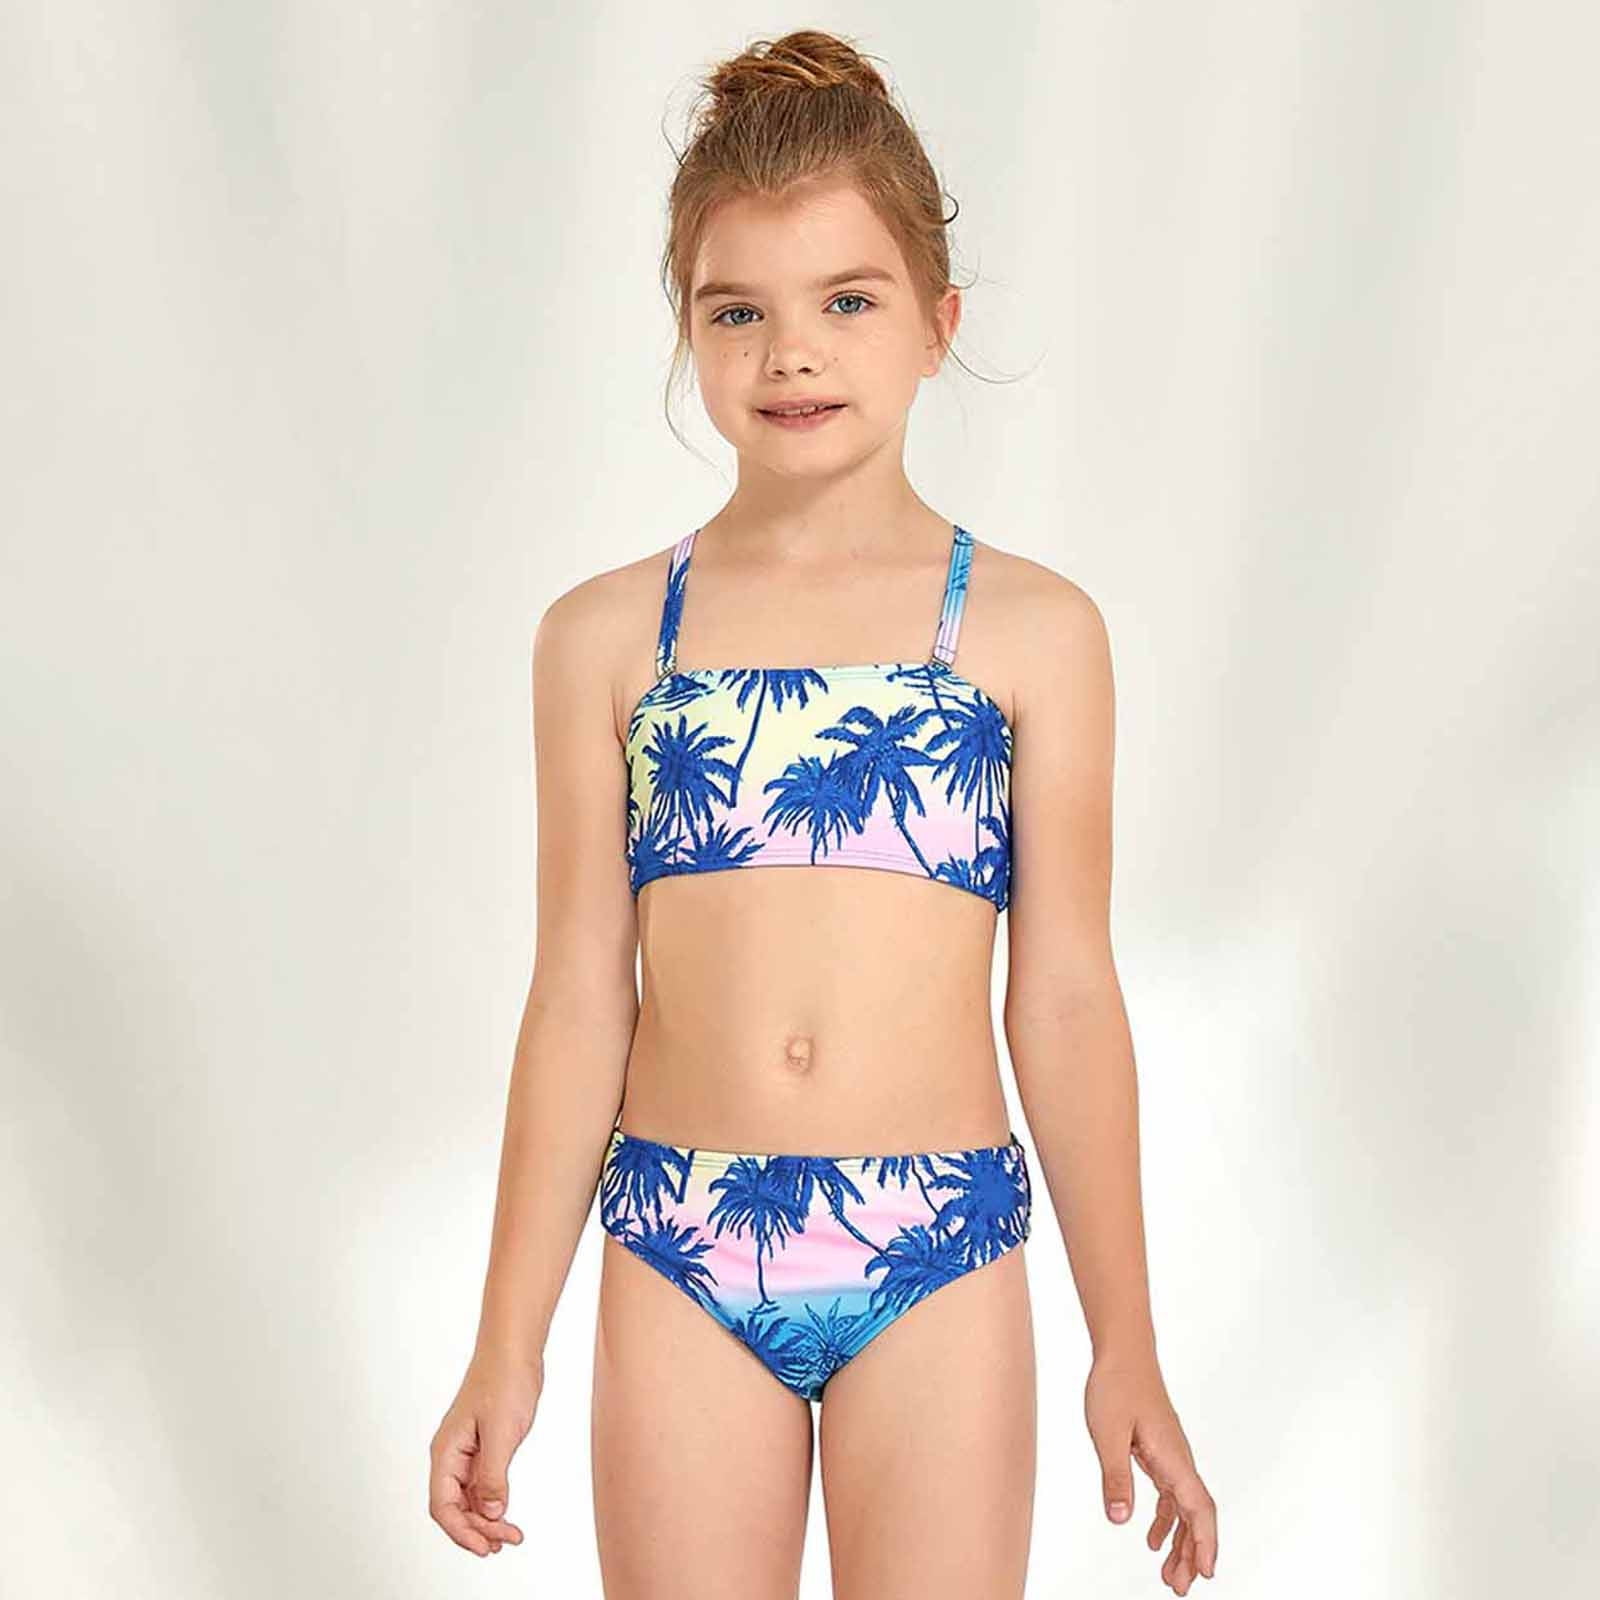 Herrnalise Baby Boys' Short-Sleeve Bodysuit Girls Holiday Cute Striped  Print Bikini Set Two Piece Swimsuit Bathing Suit